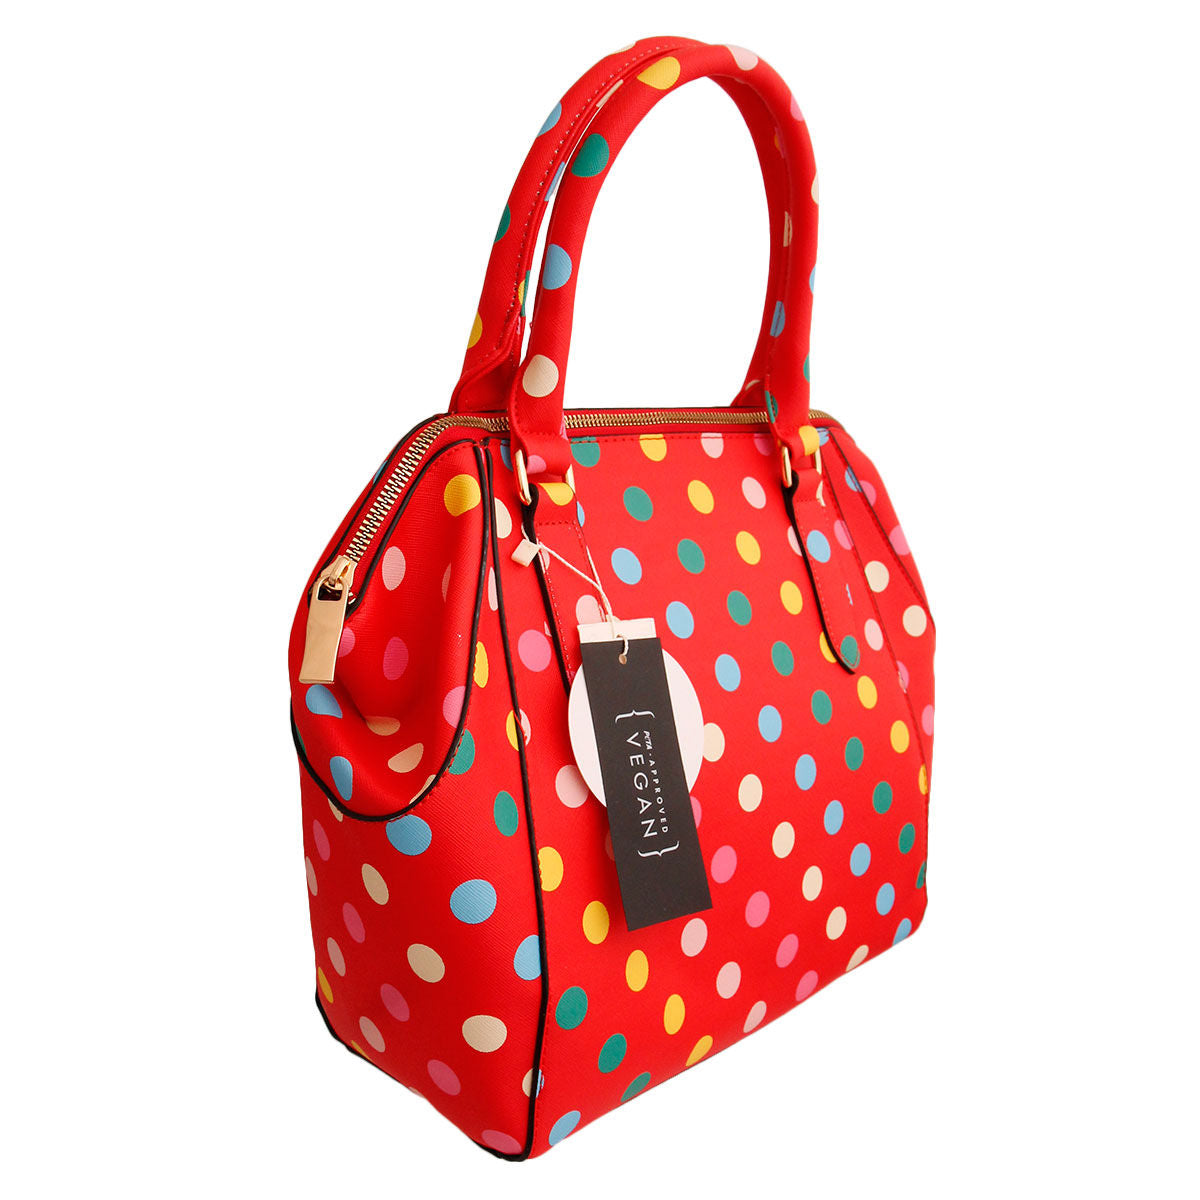 Red Polka Dot Handbag Set